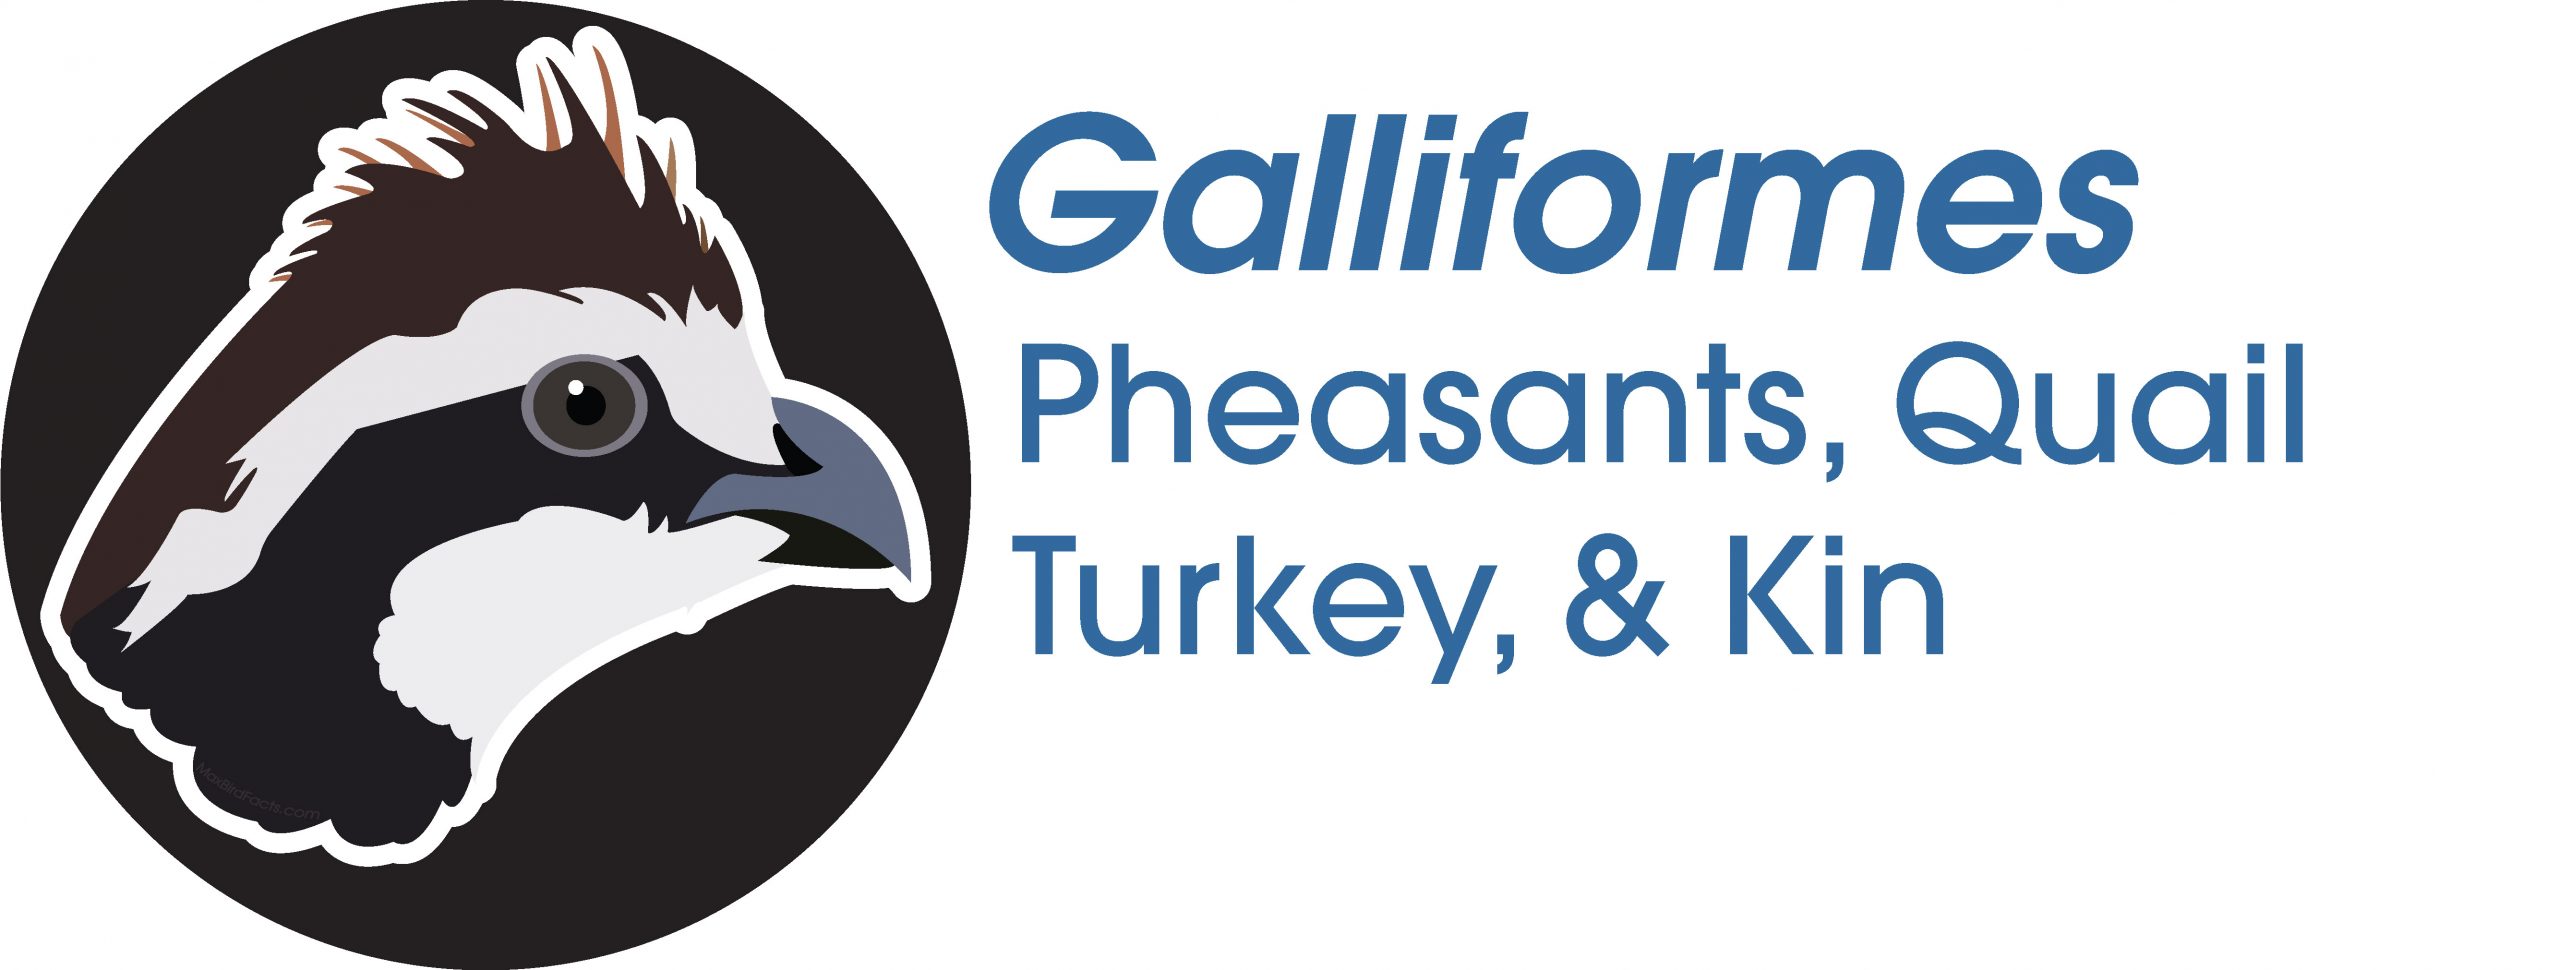 Galliformes
Pheasants, Quail, Turkey, and Kin
Northern Bobwhite